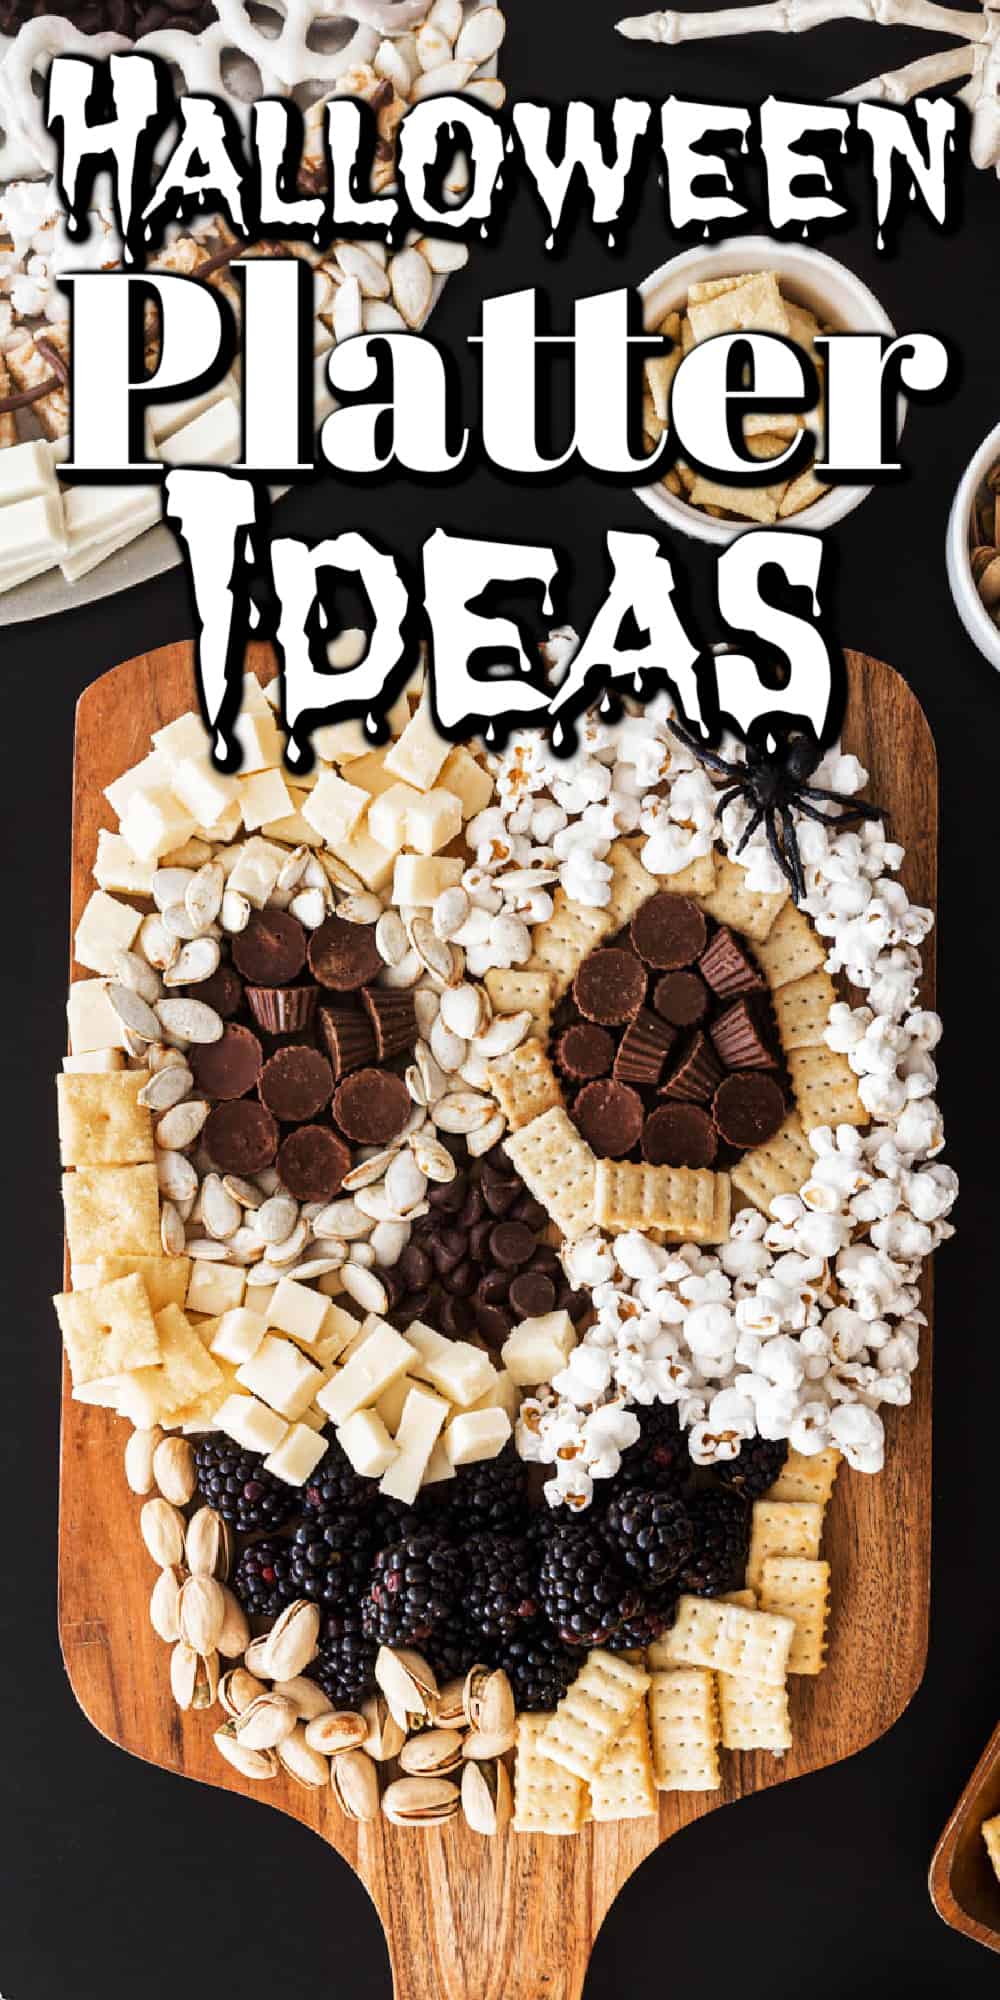 Halloween Platter Ideas Pin